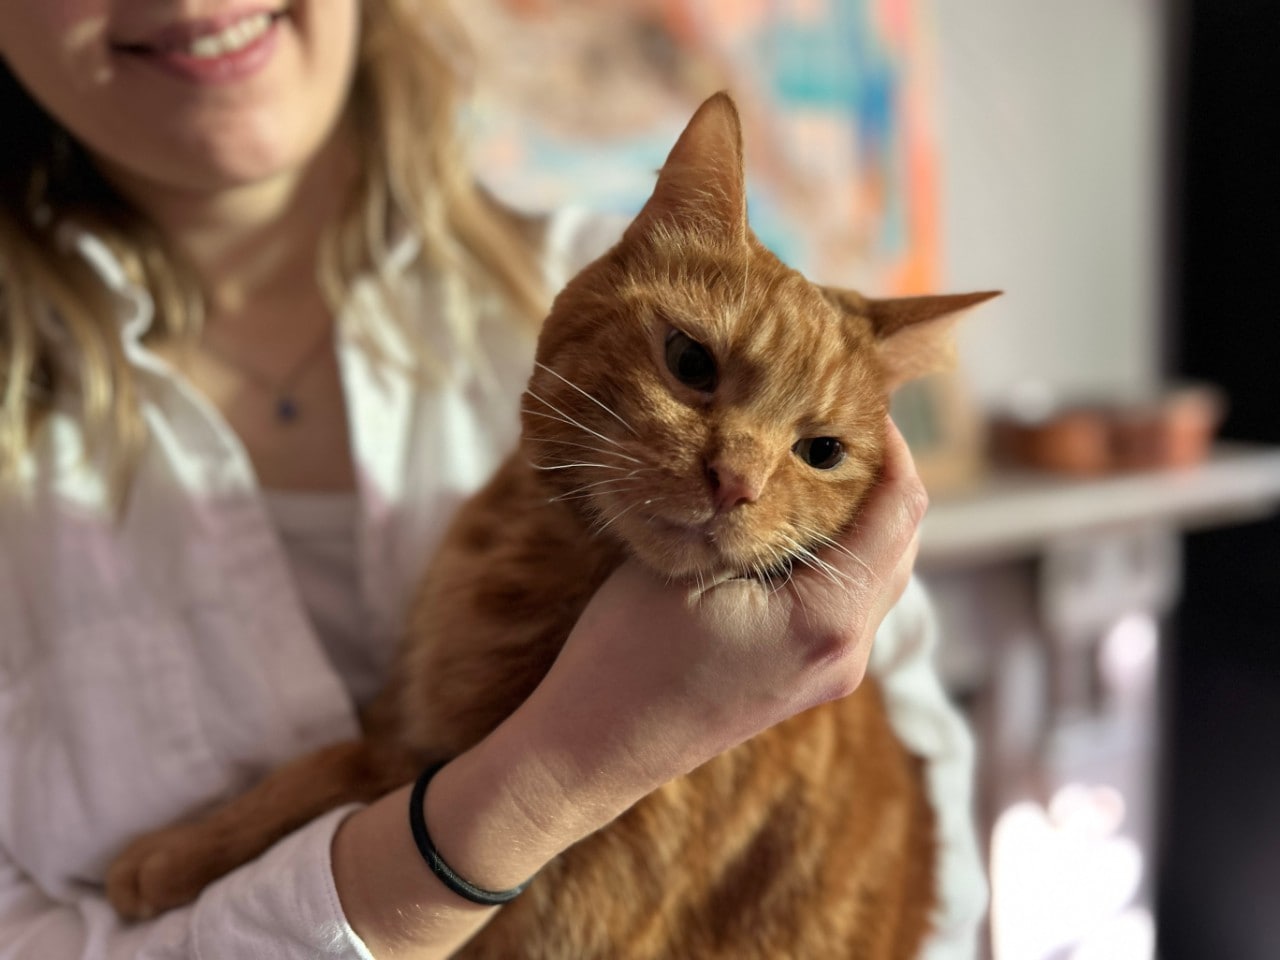 New Simon's Cat video focuses on cat sounds